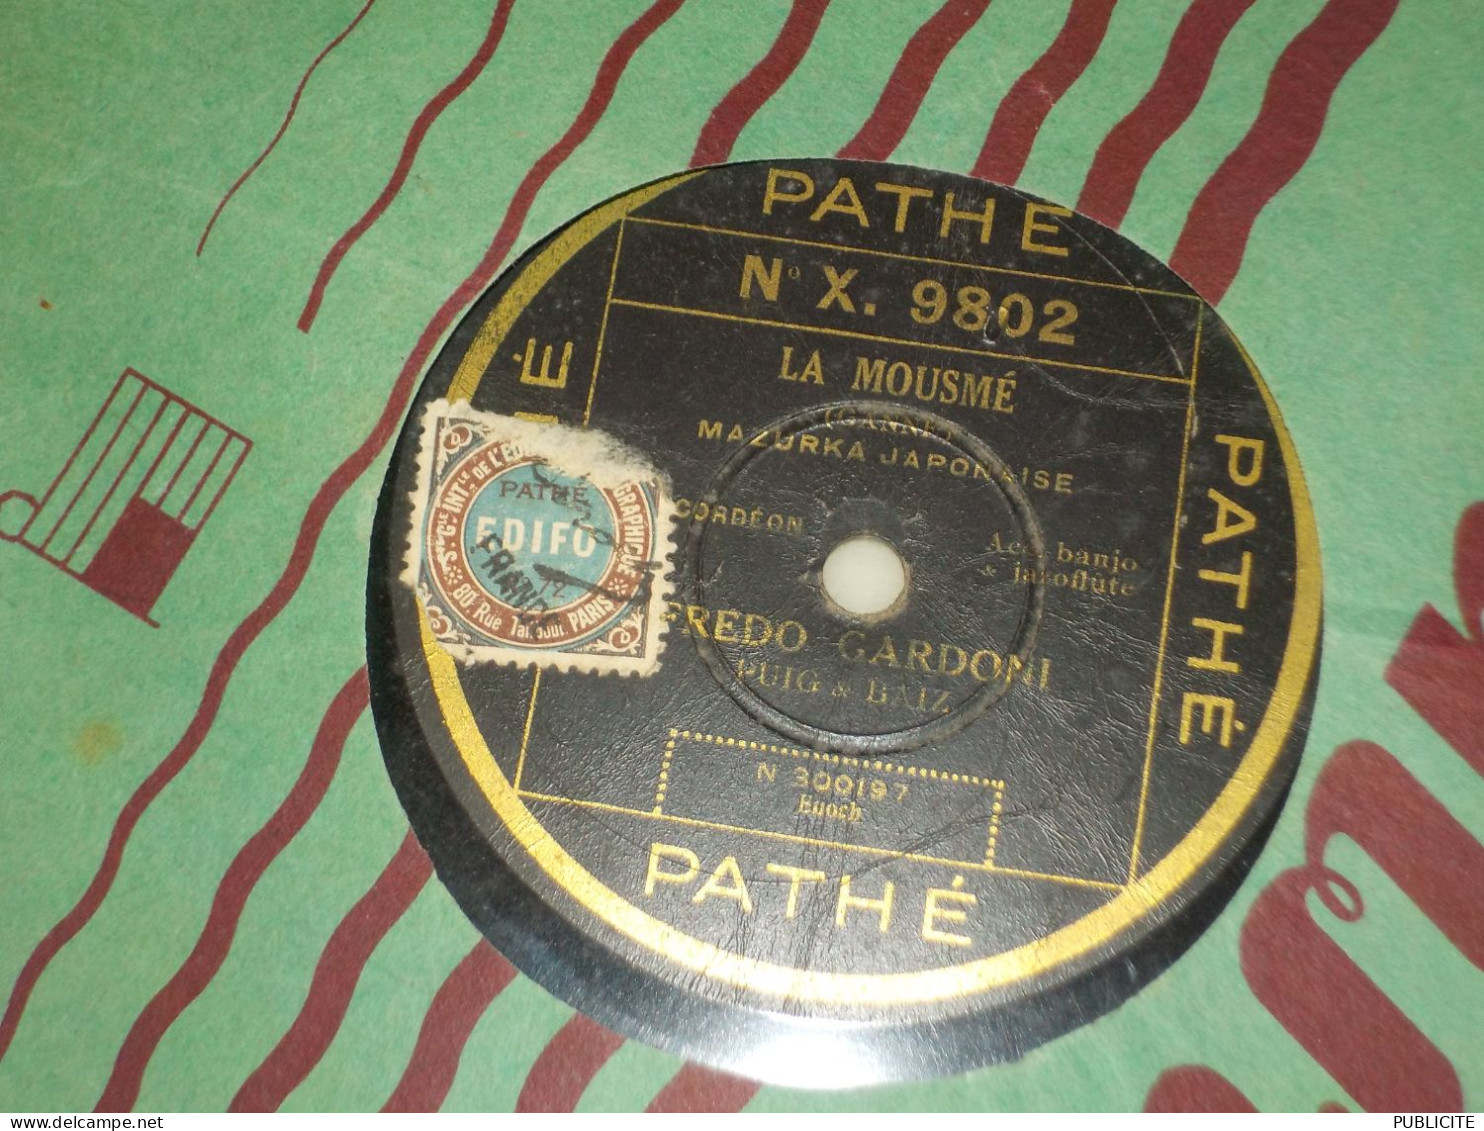 DISQUE 78 TOURS DE FREDO GARDONI 1932 - 78 Rpm - Gramophone Records